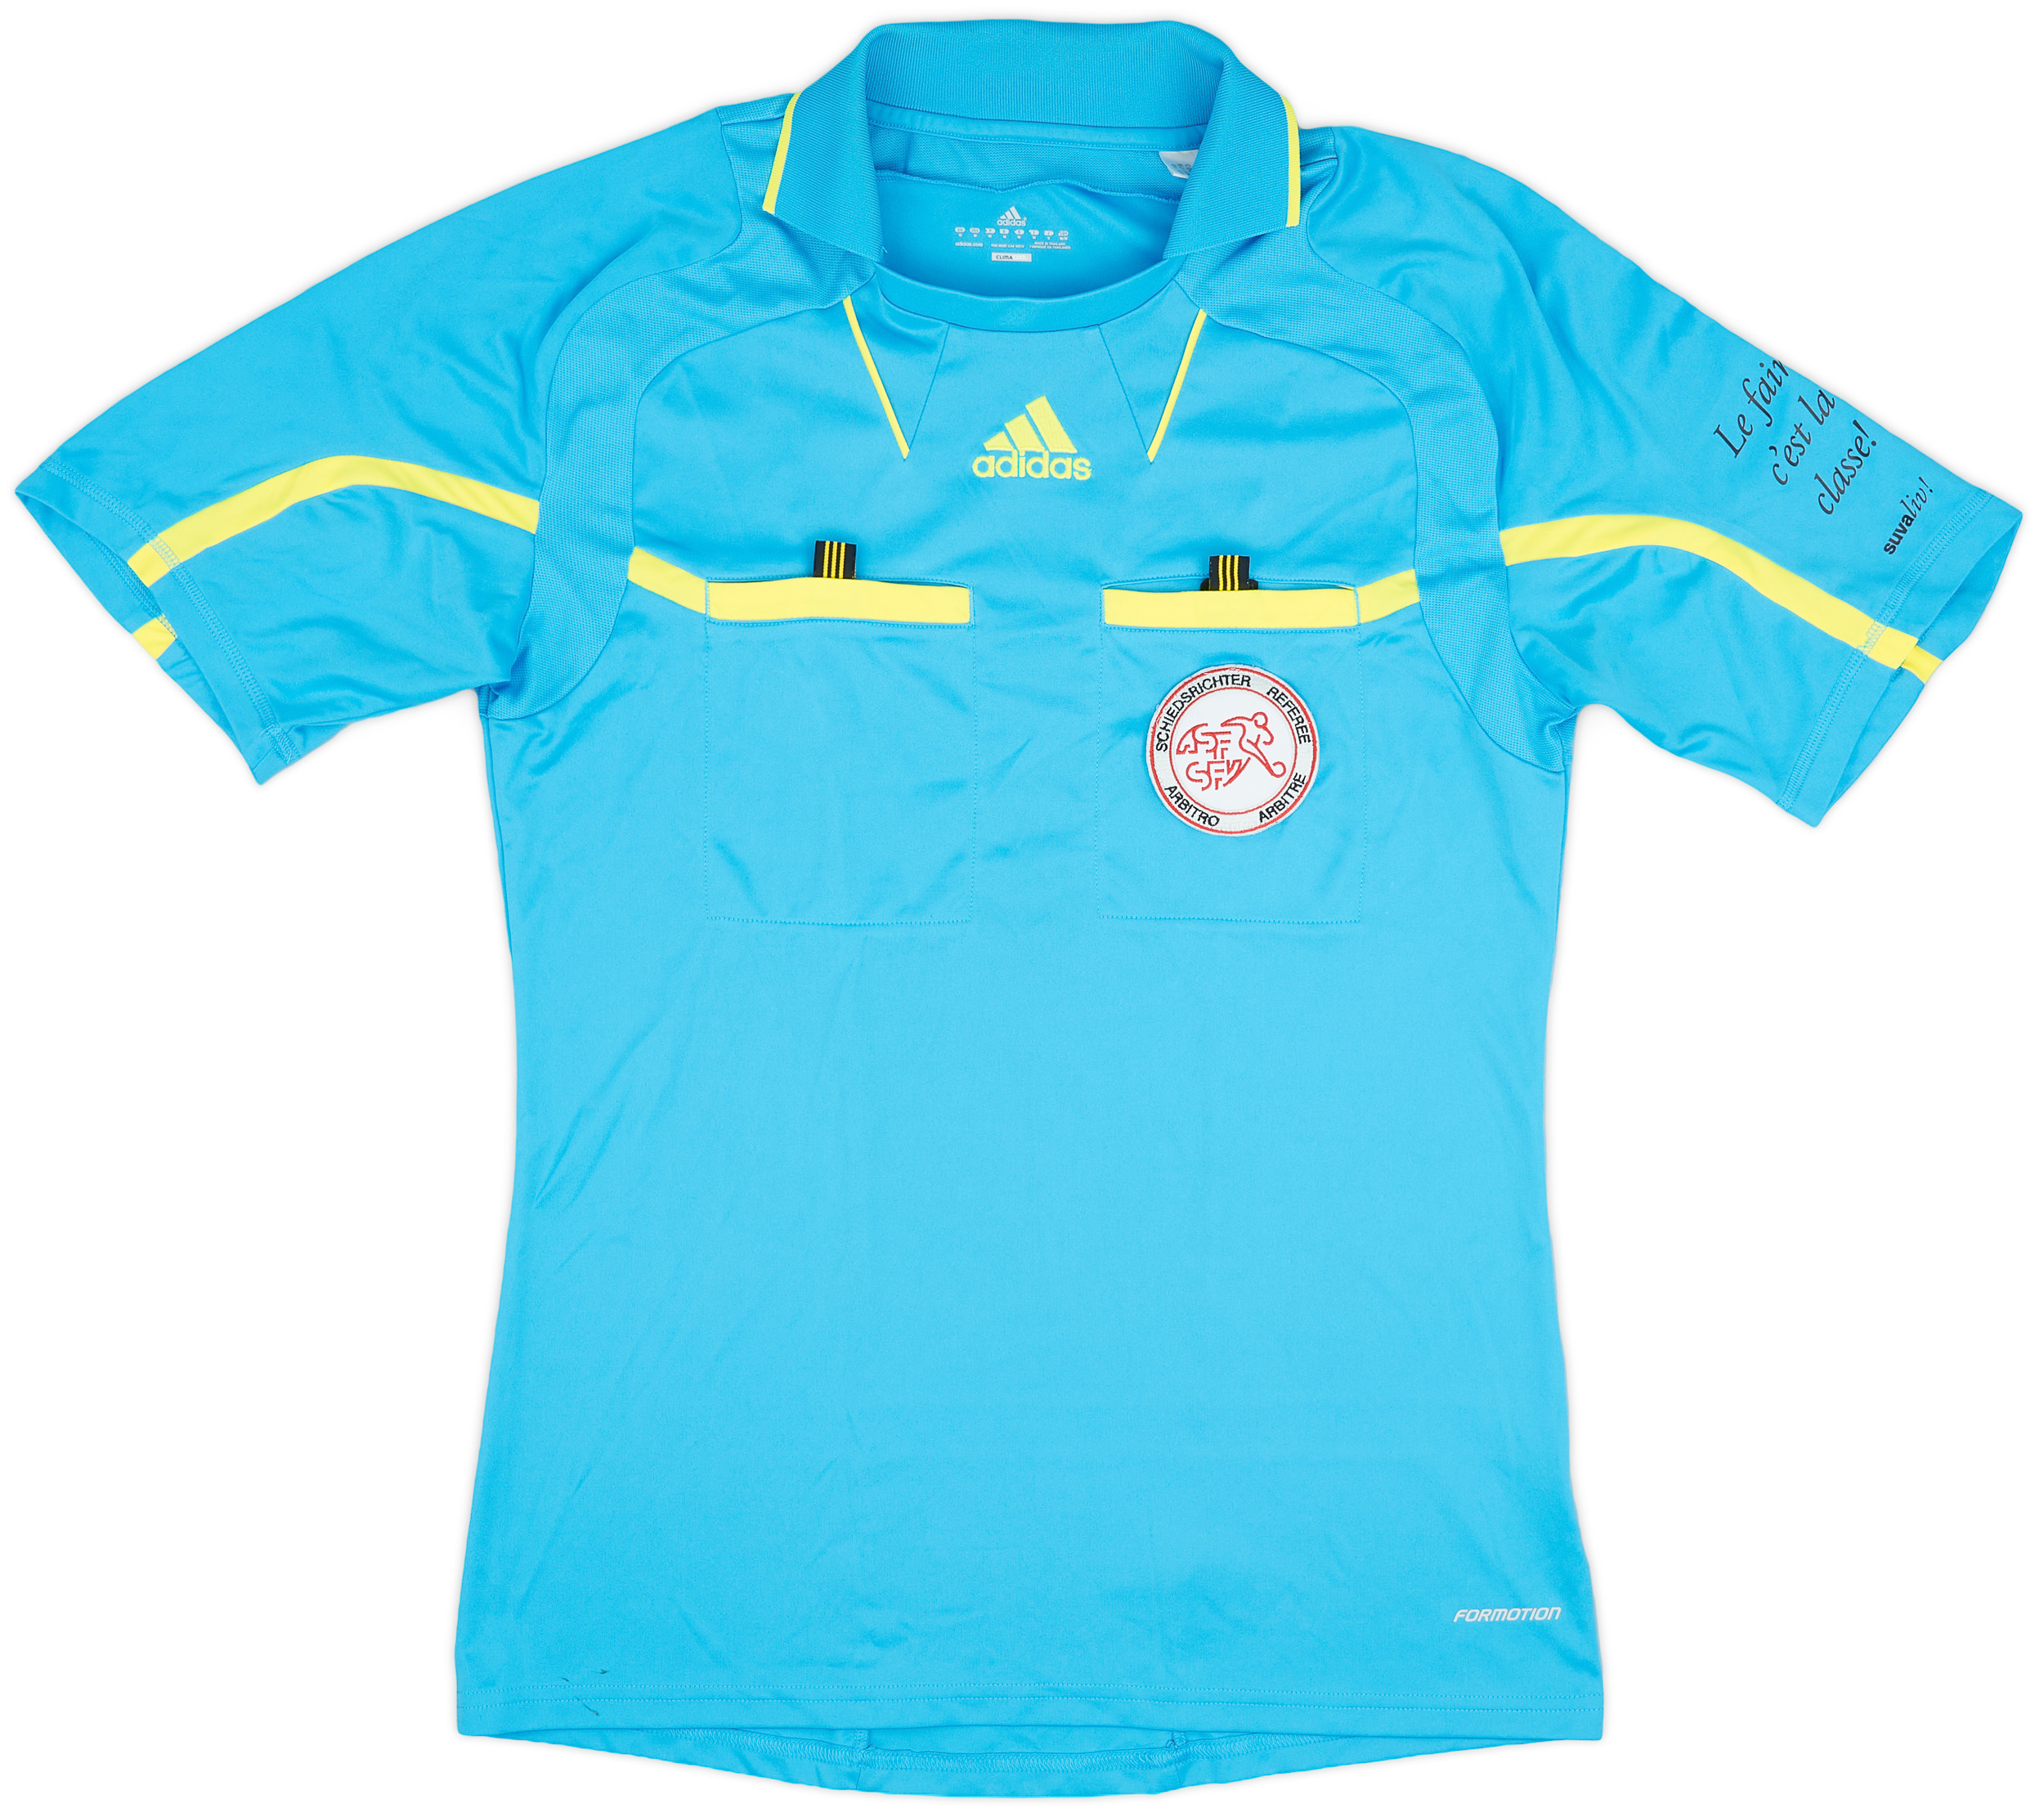 2010-11 Switzerland adidas Referee Shirt - 9/10 - ()